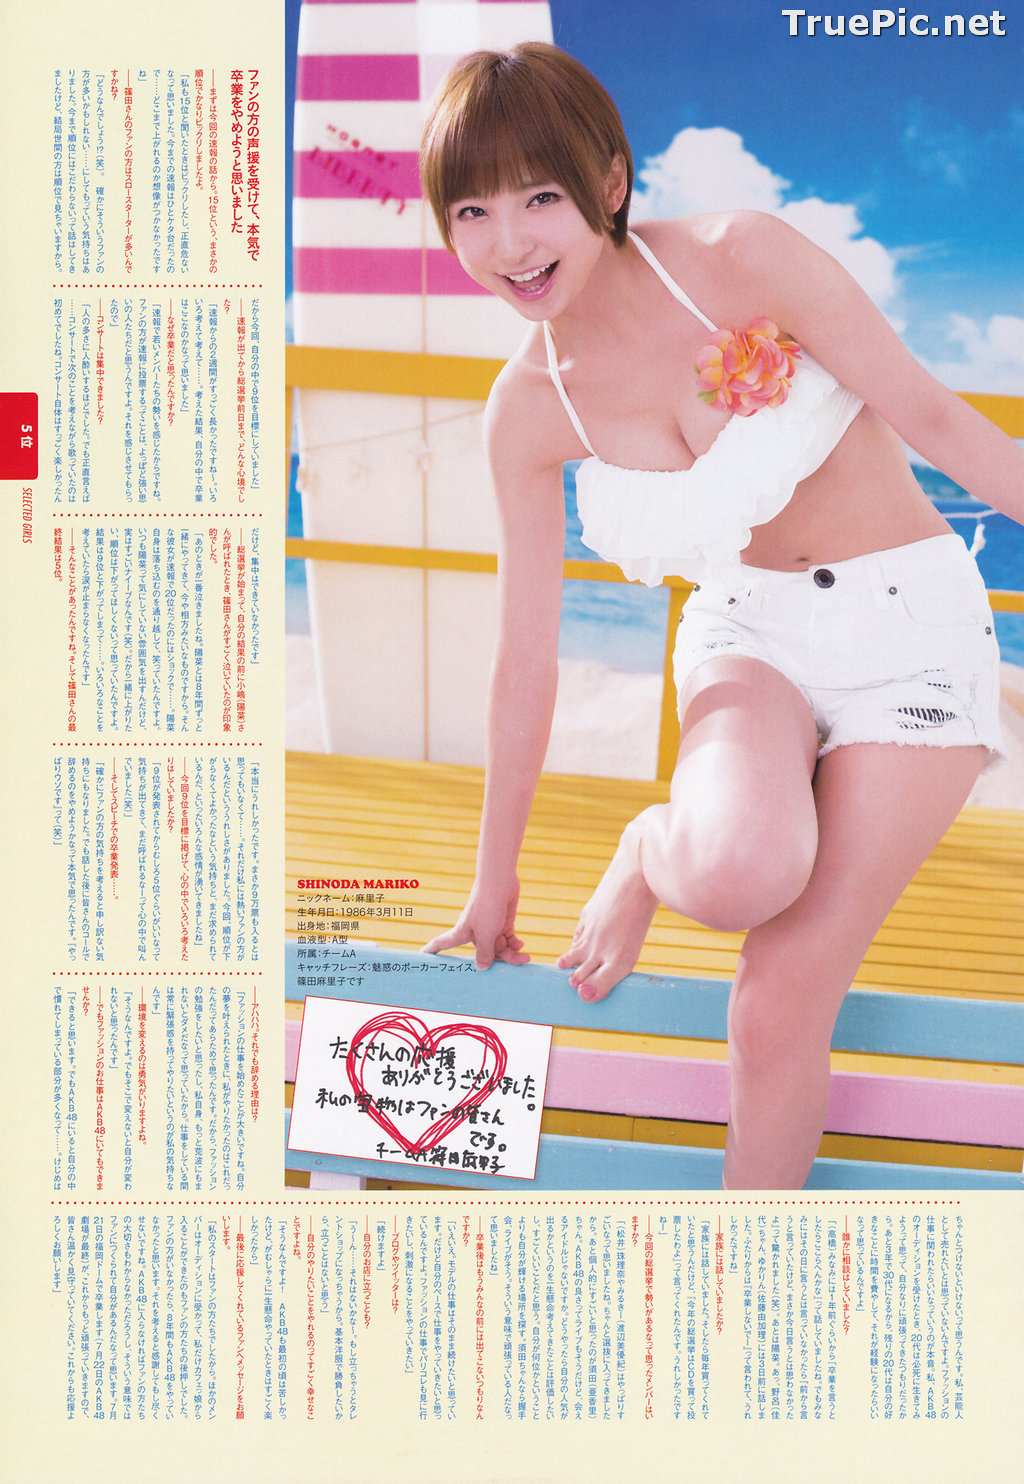 Image AKB48 General Election! Swimsuit Surprise Announcement 2013 - TruePic.net - Picture-24